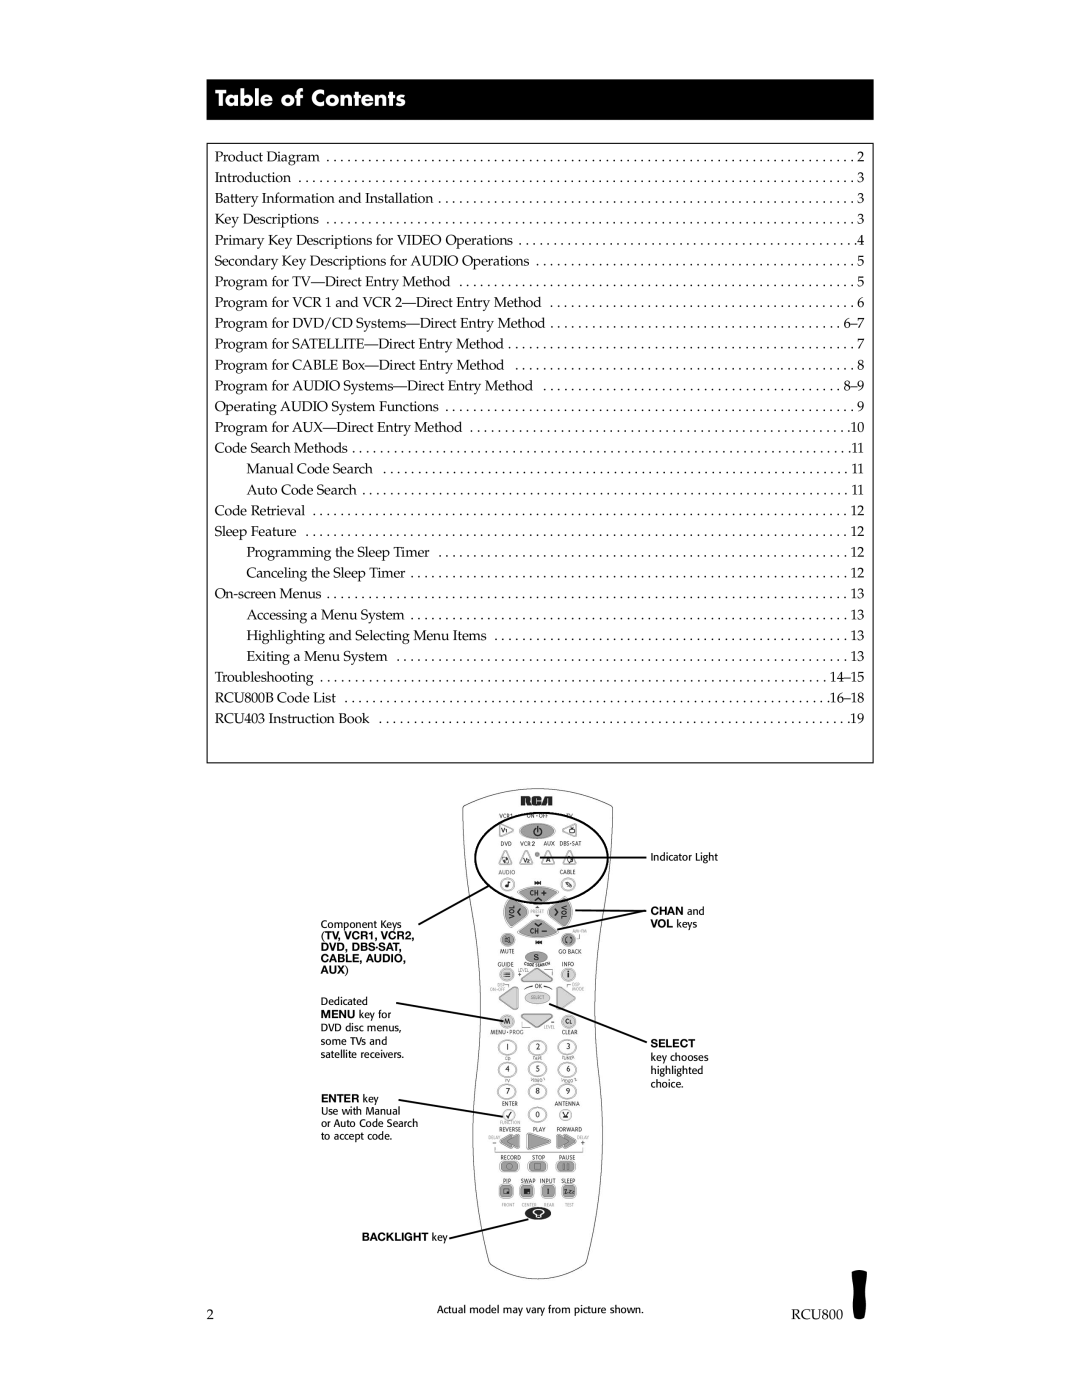 RCA RCU800B manual Table of Contents 